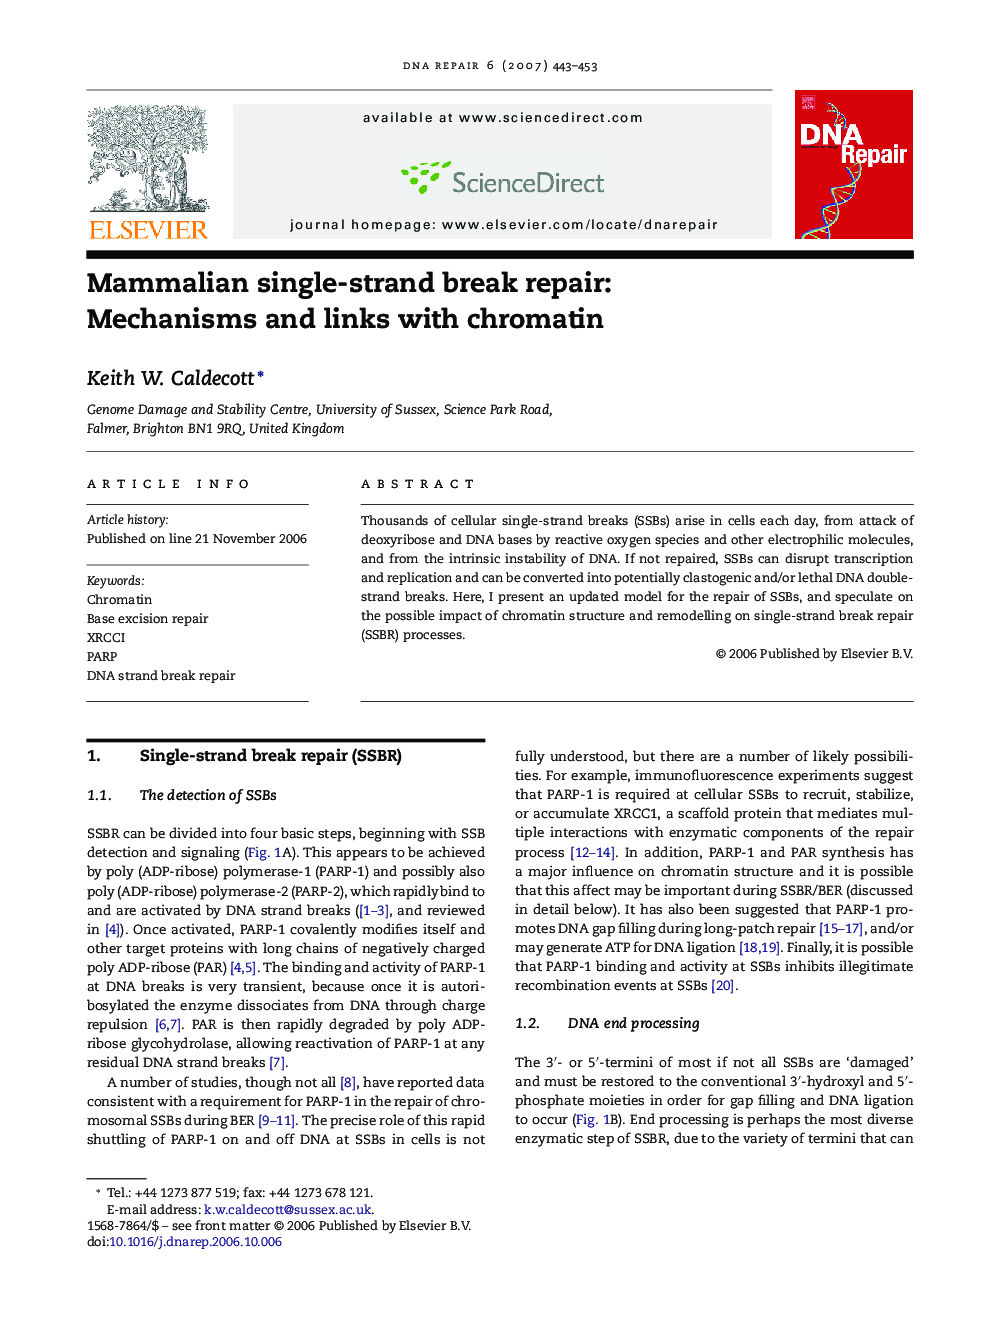 Mammalian single-strand break repair: Mechanisms and links with chromatin